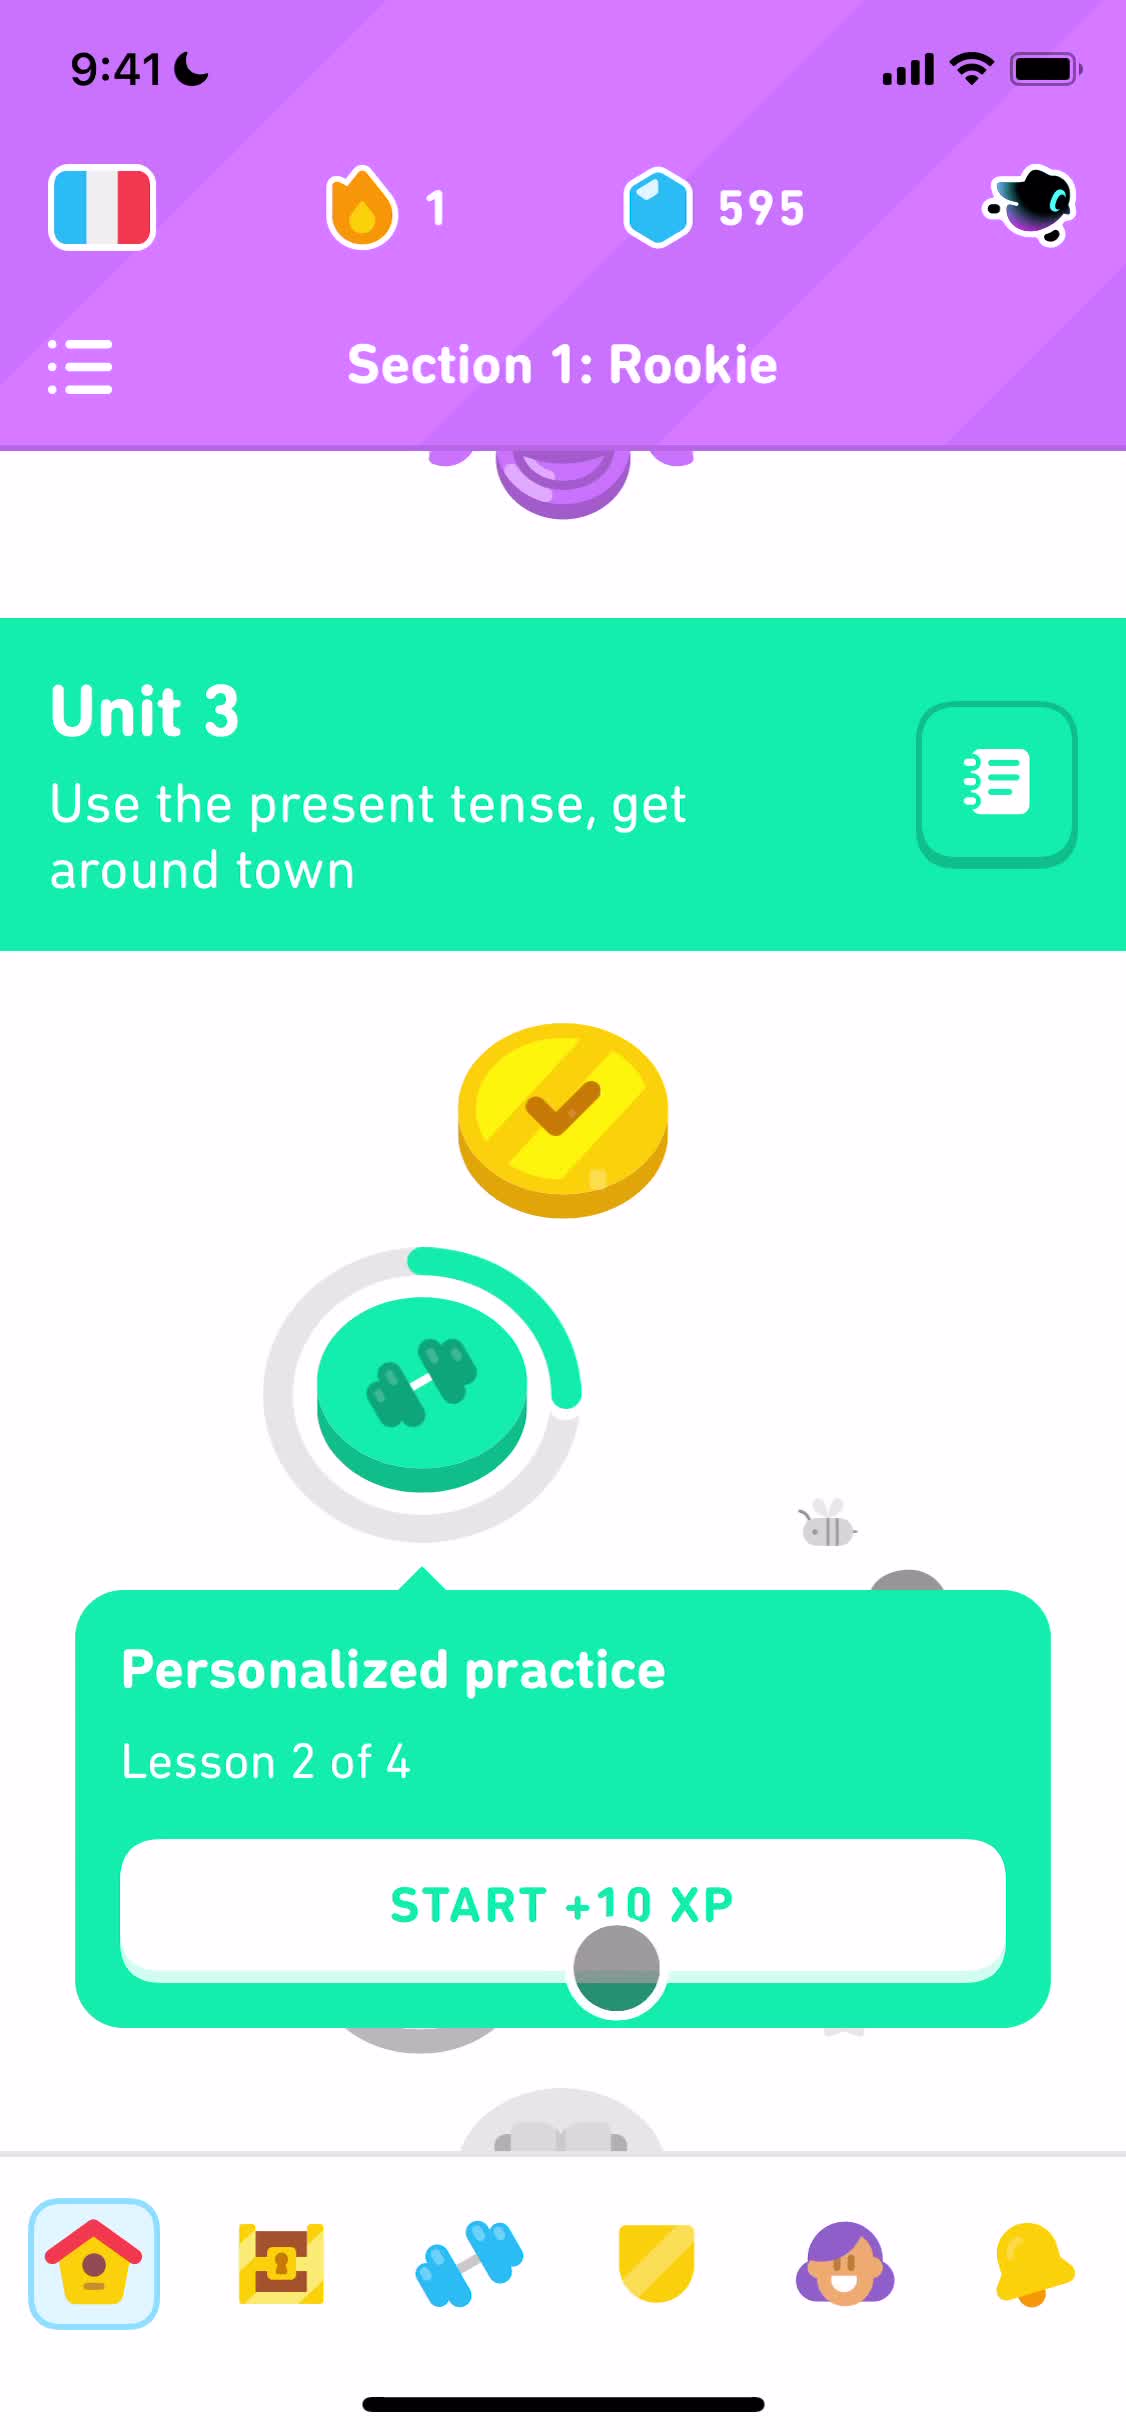 Screenshot of Start quiz on General browsing on Duolingo user flow